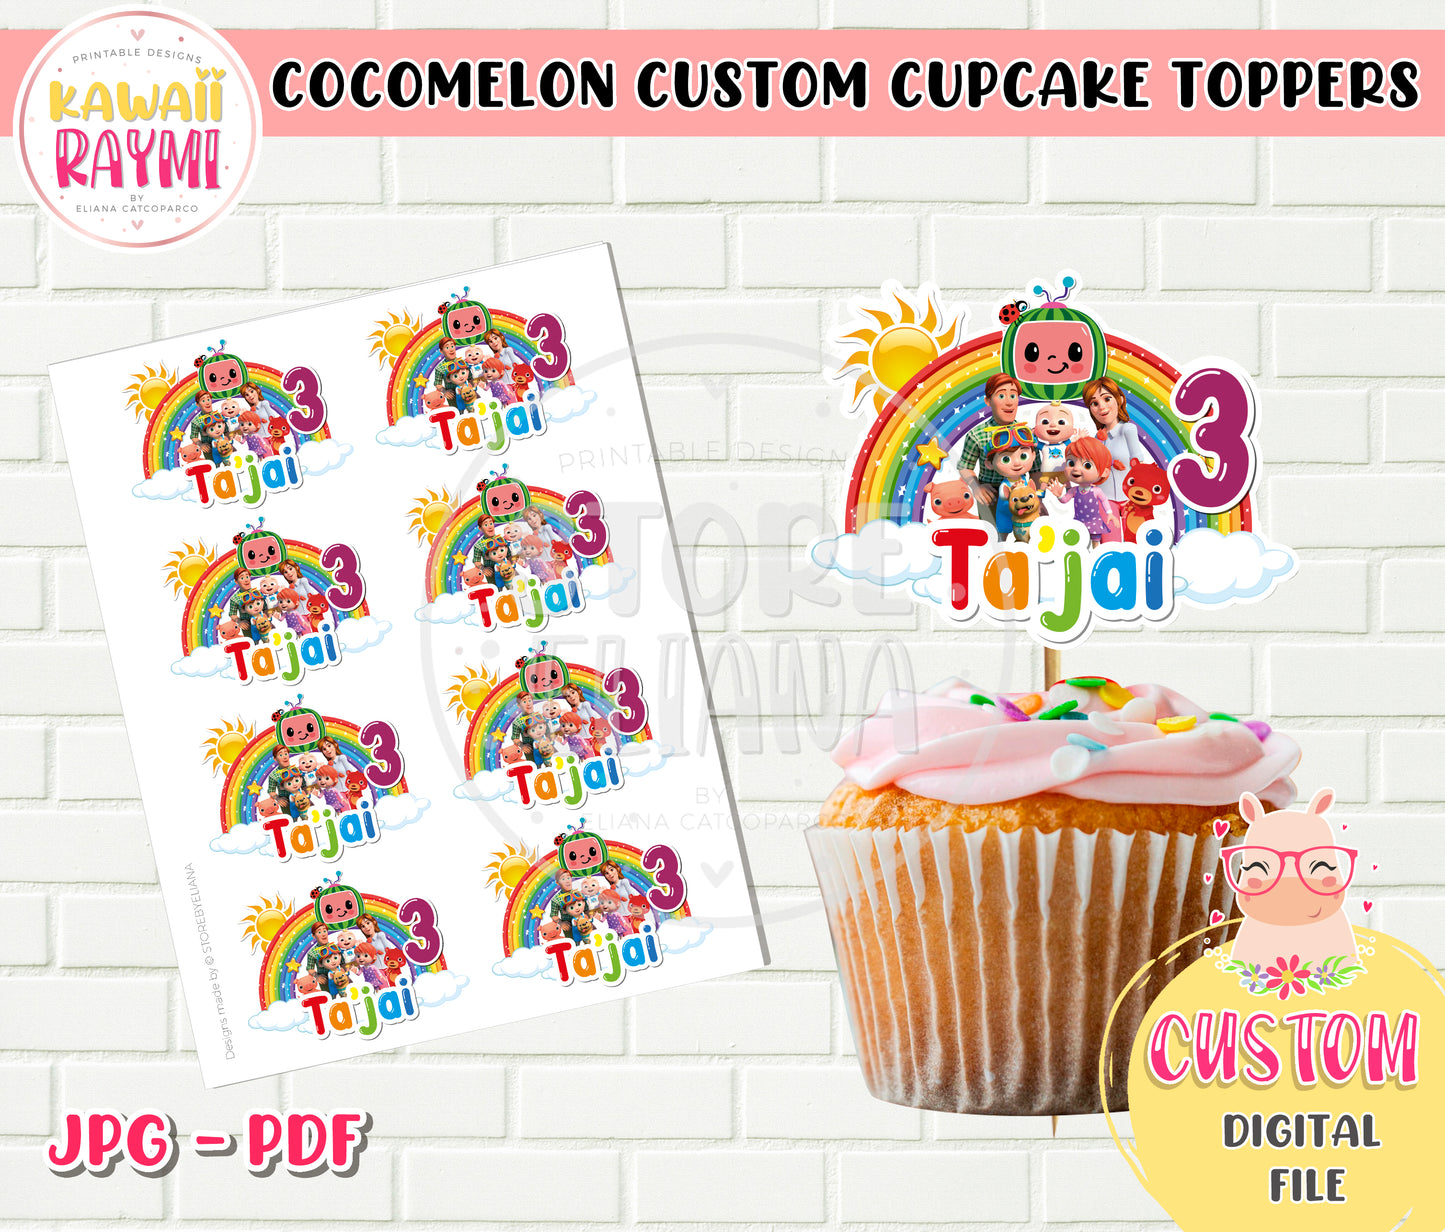 Cocomelon custom cupcake toppers, digital file, jj baby -PDF